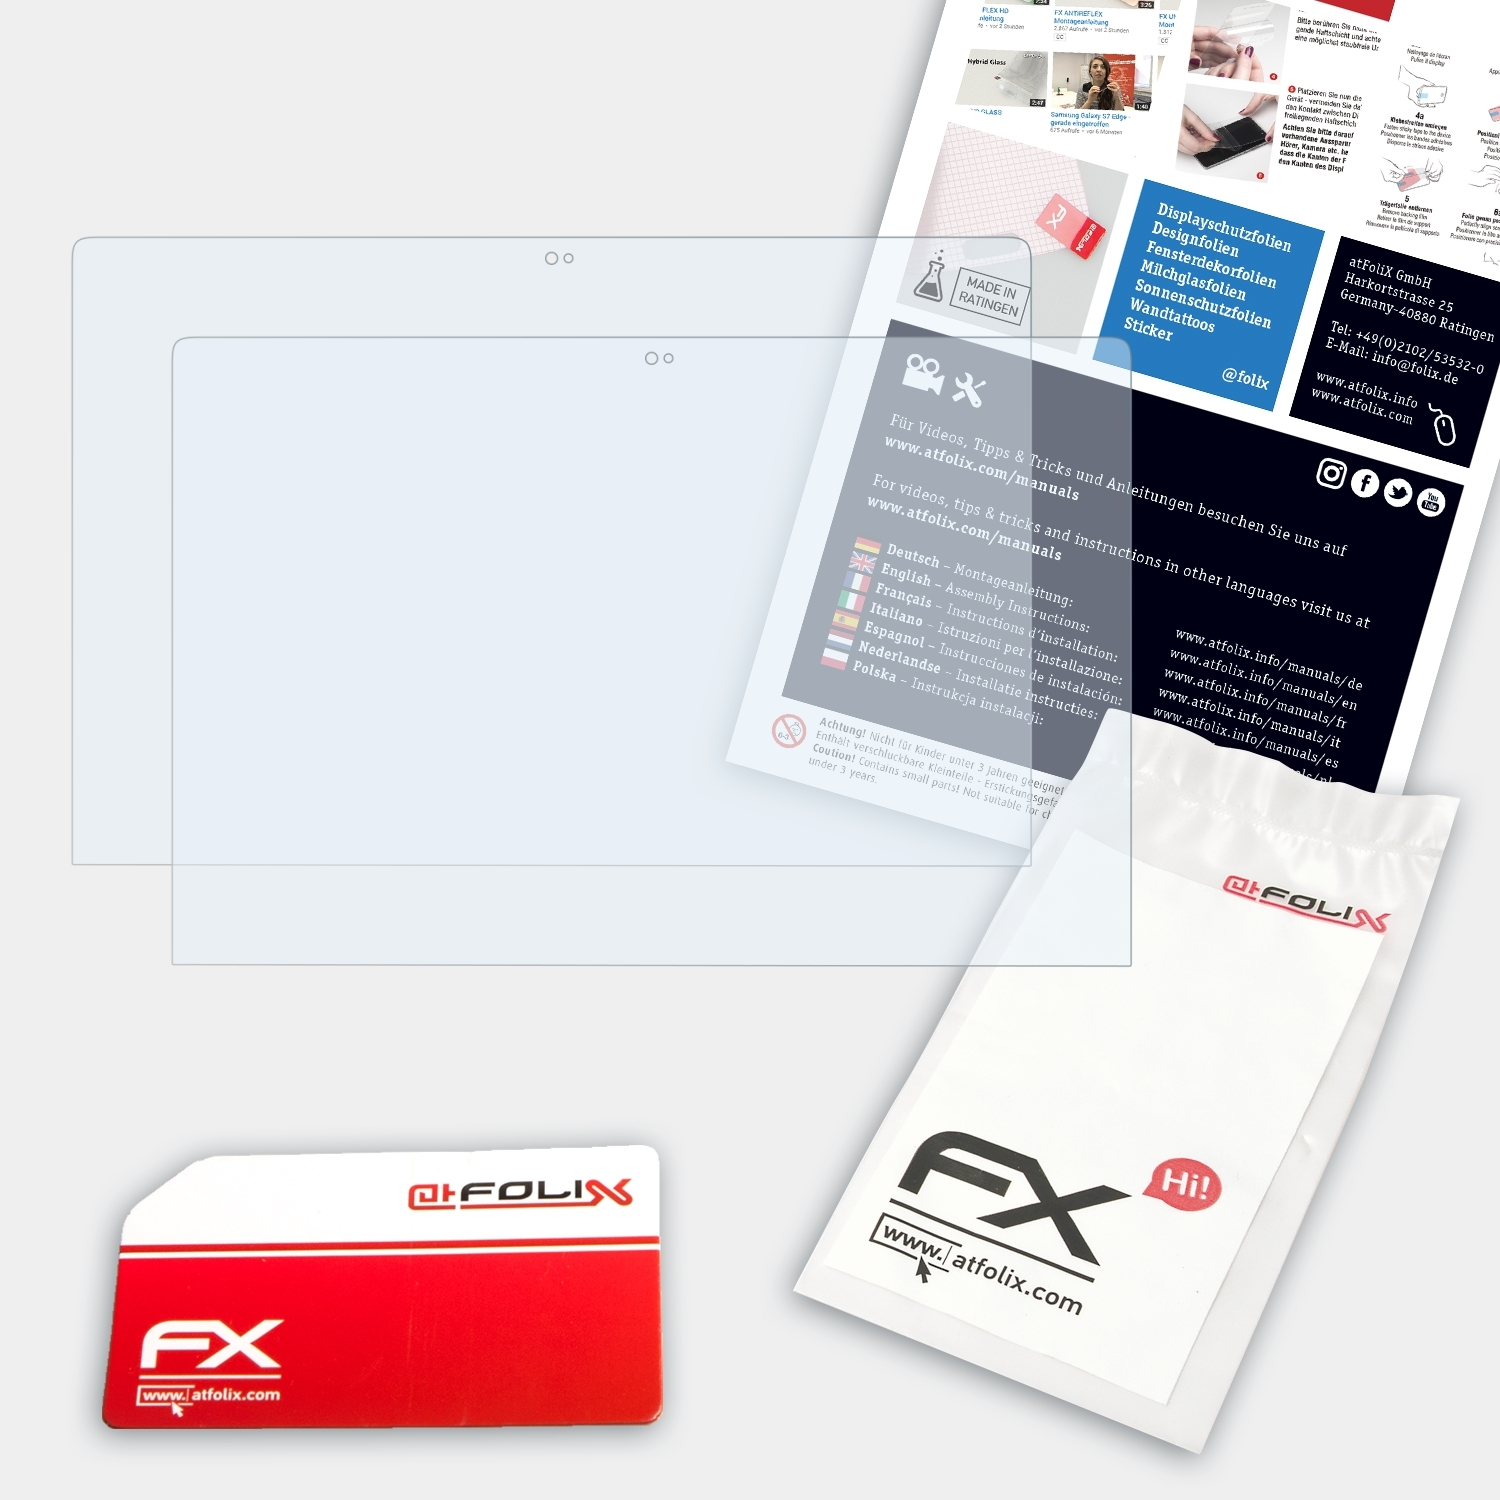 Displayschutz(für Lenovo ATFOLIX ThinkPad Yoga 460) 2x FX-Clear